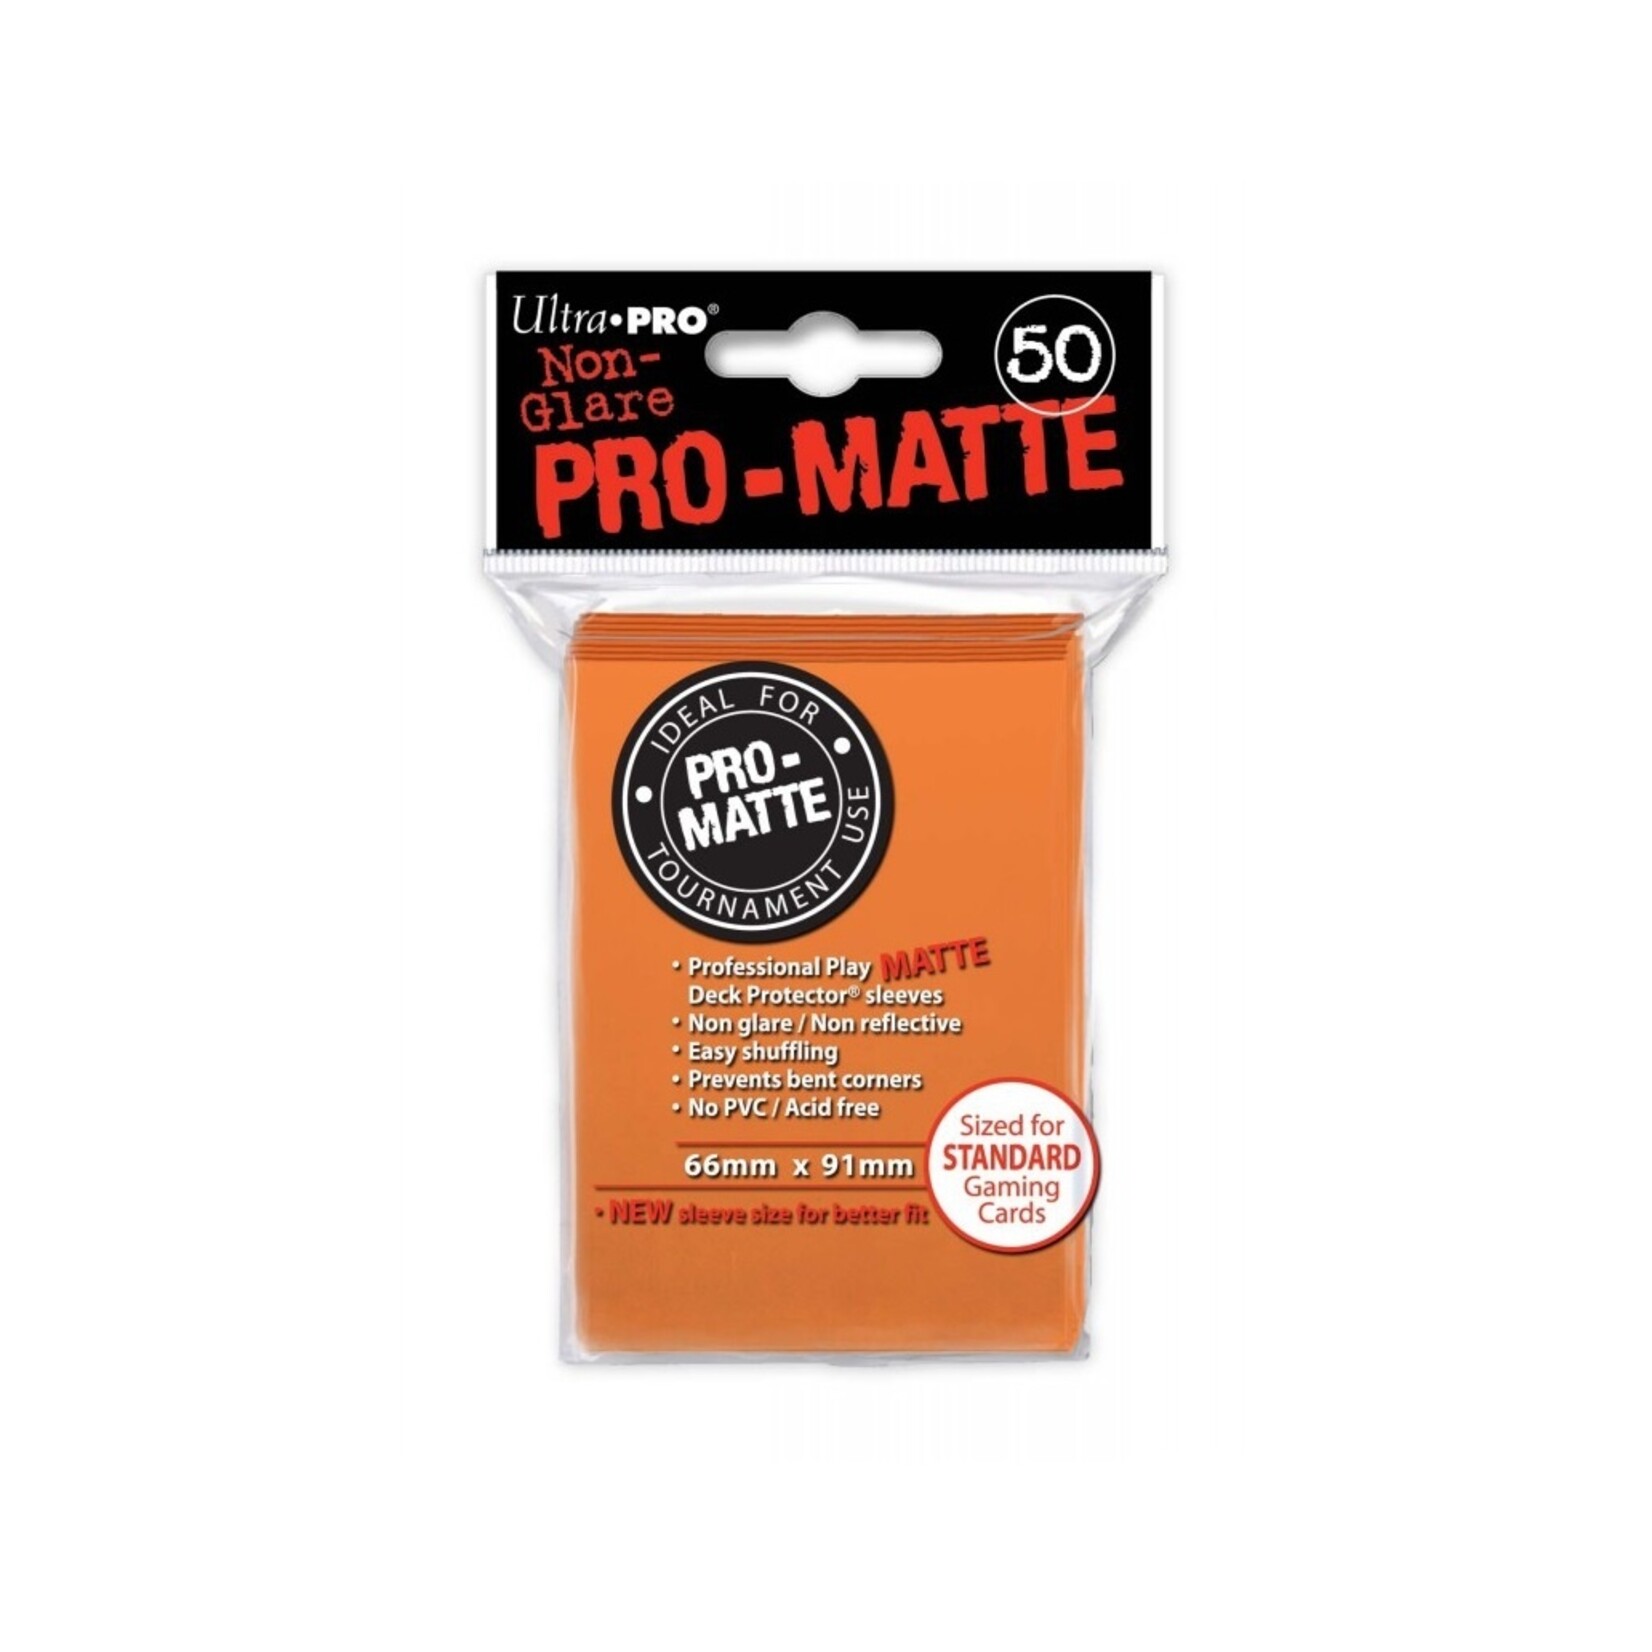 Ultra-Pro Deck Protector sleeves - Pro Matte - Orange (50)